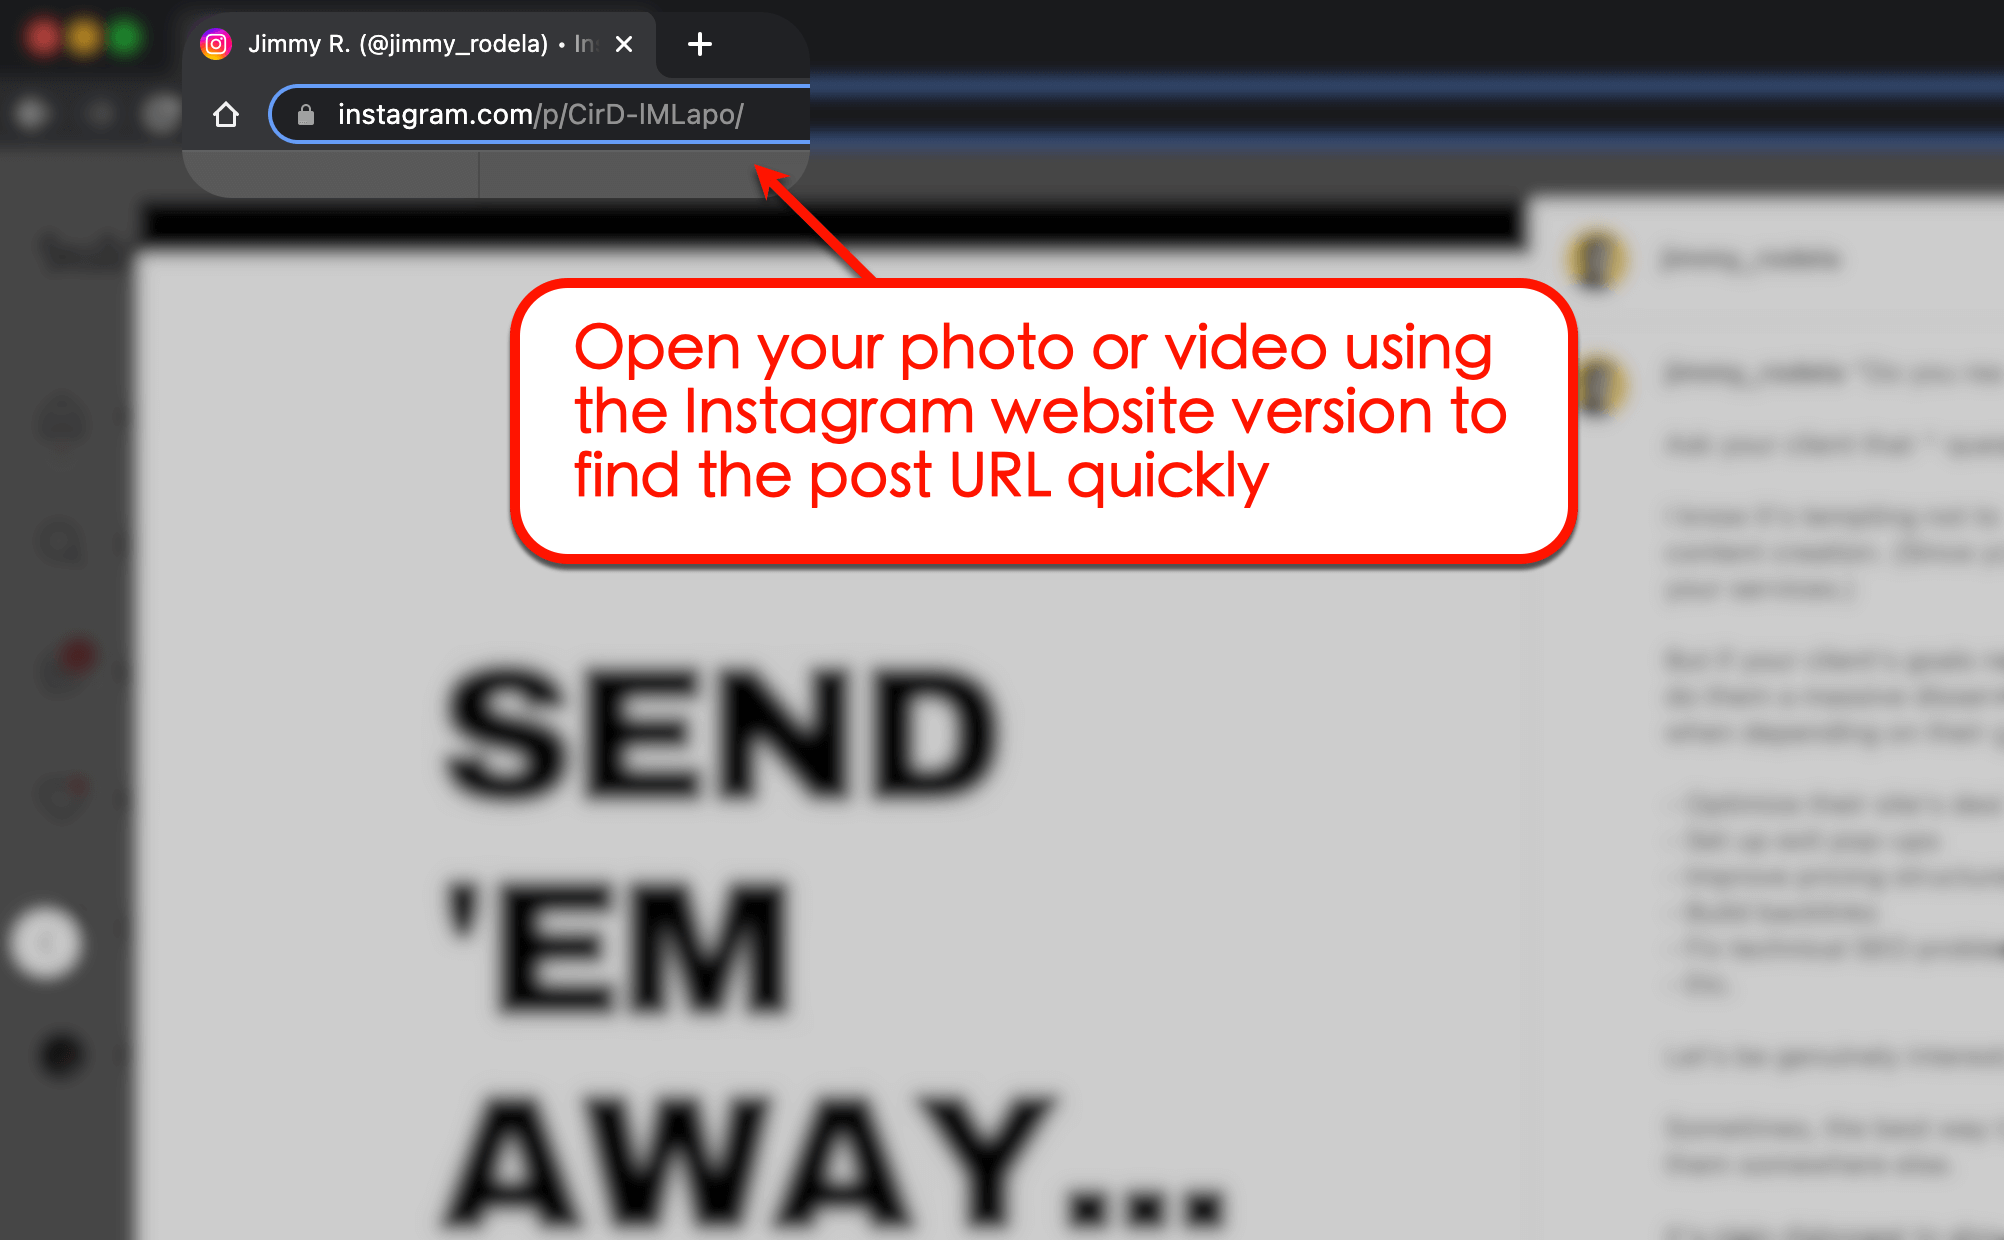 Open photo or video using Instagram website version